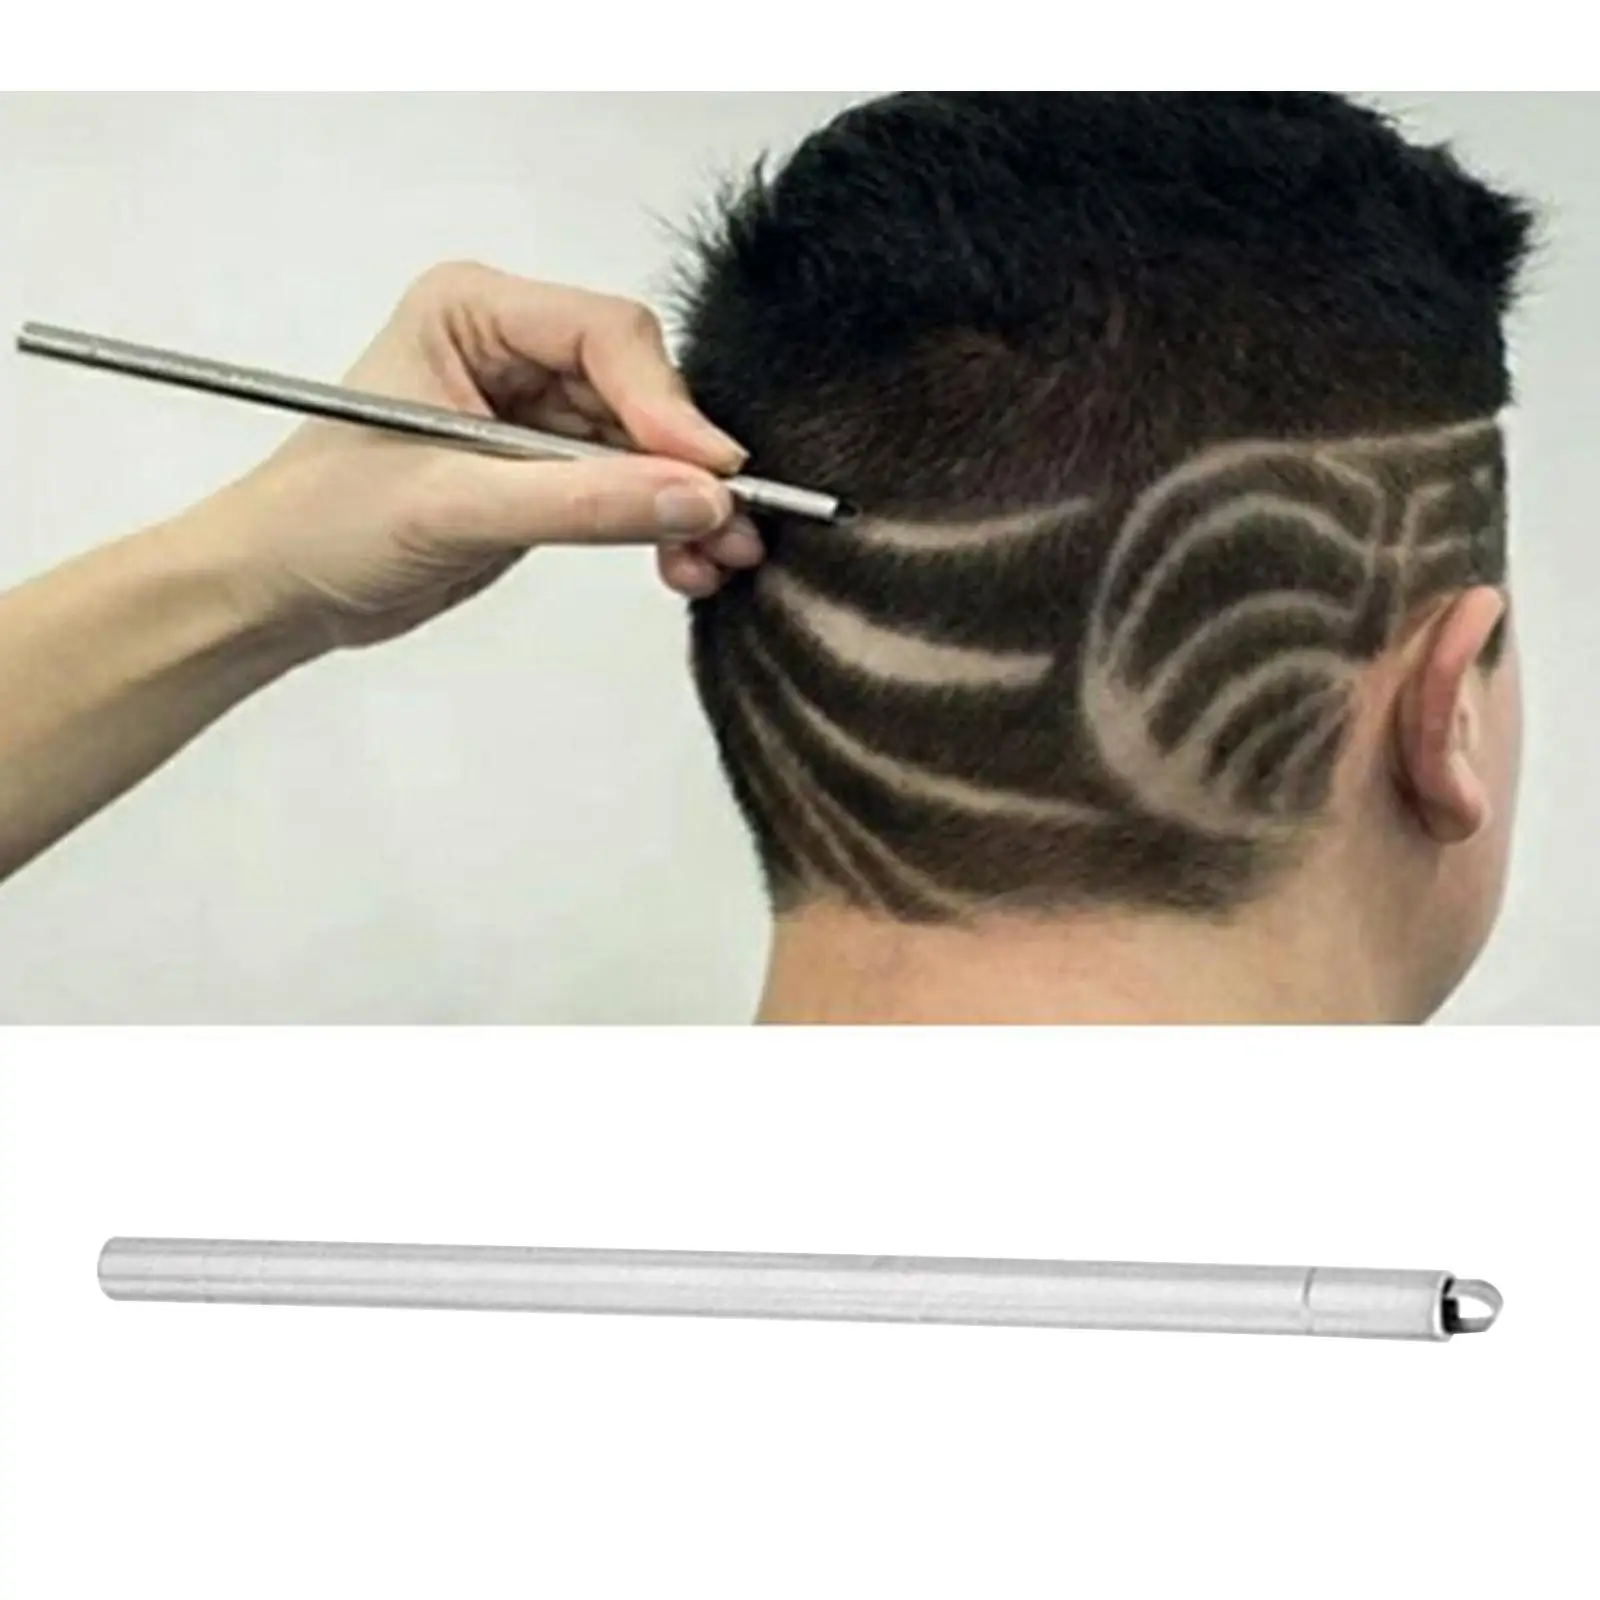 Hair Razor Pen Trim Tattoos Beards Shaver Engraving Pen Barber Accessories for Men Women